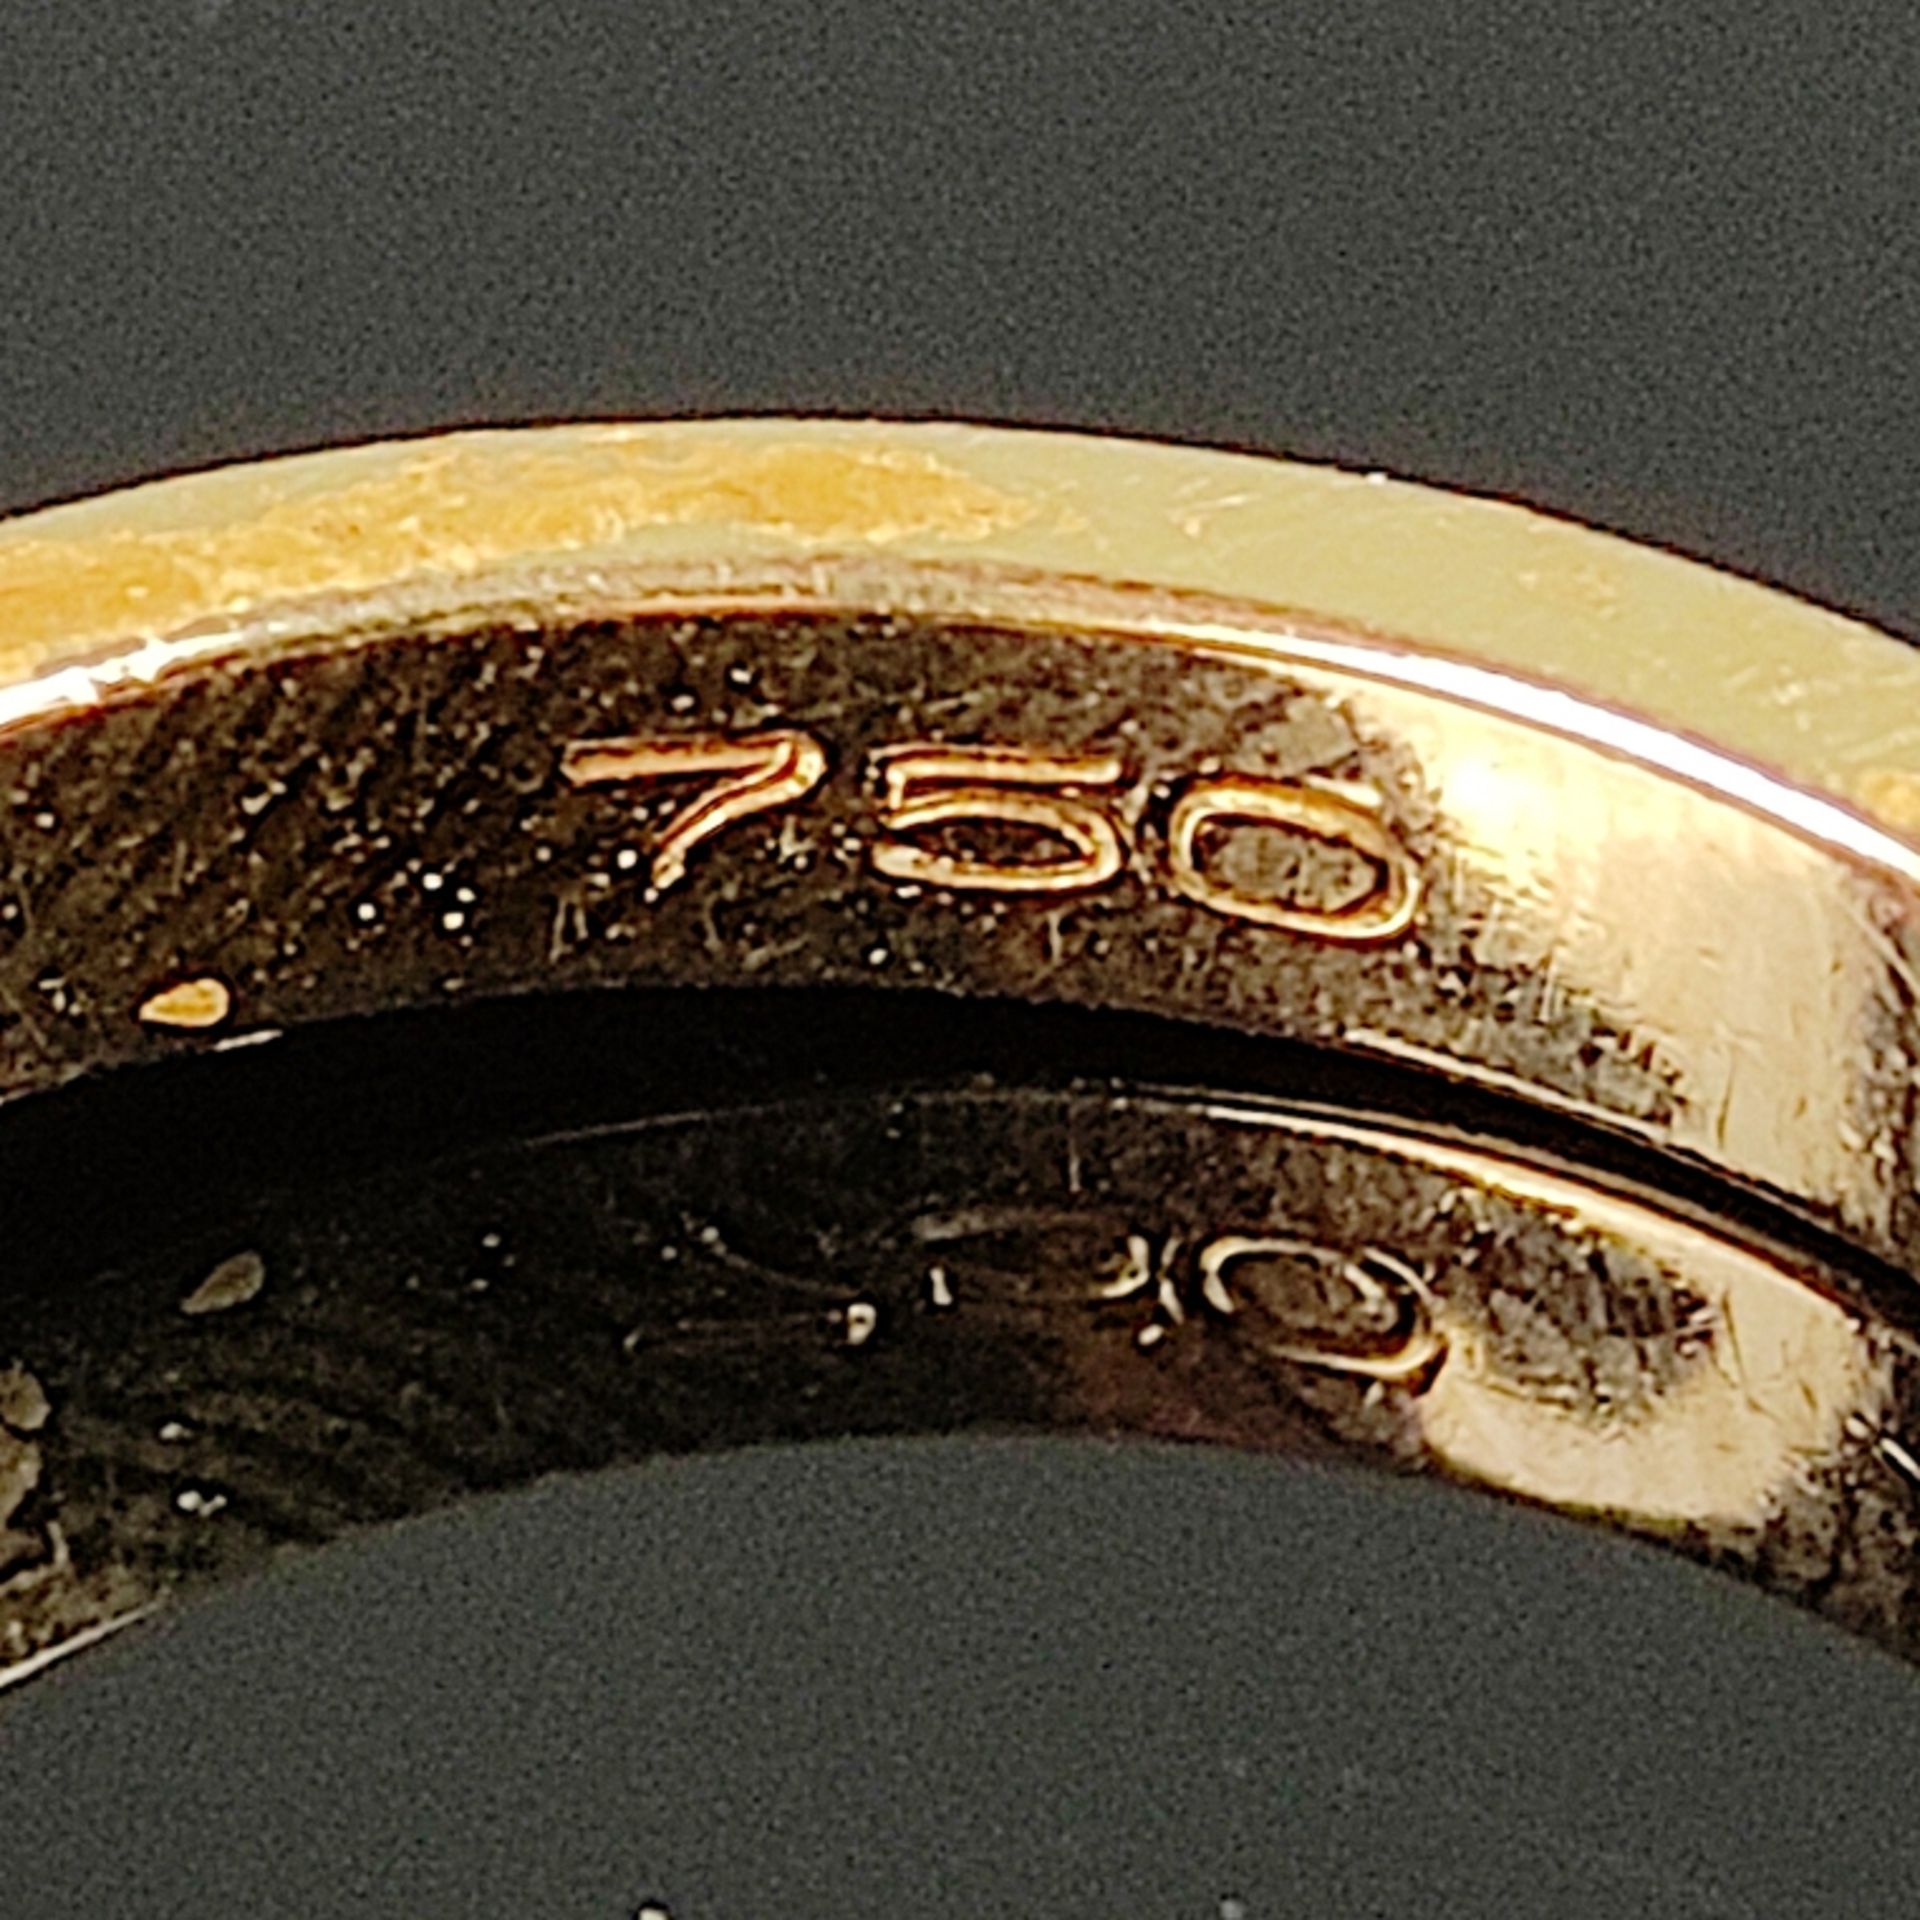 Diamant Ring, 750/18K Gelbgold (punziert), 3,52g, mittig Diamant um 0,43ct., beidseitig je 2 Diaman - Bild 3 aus 4